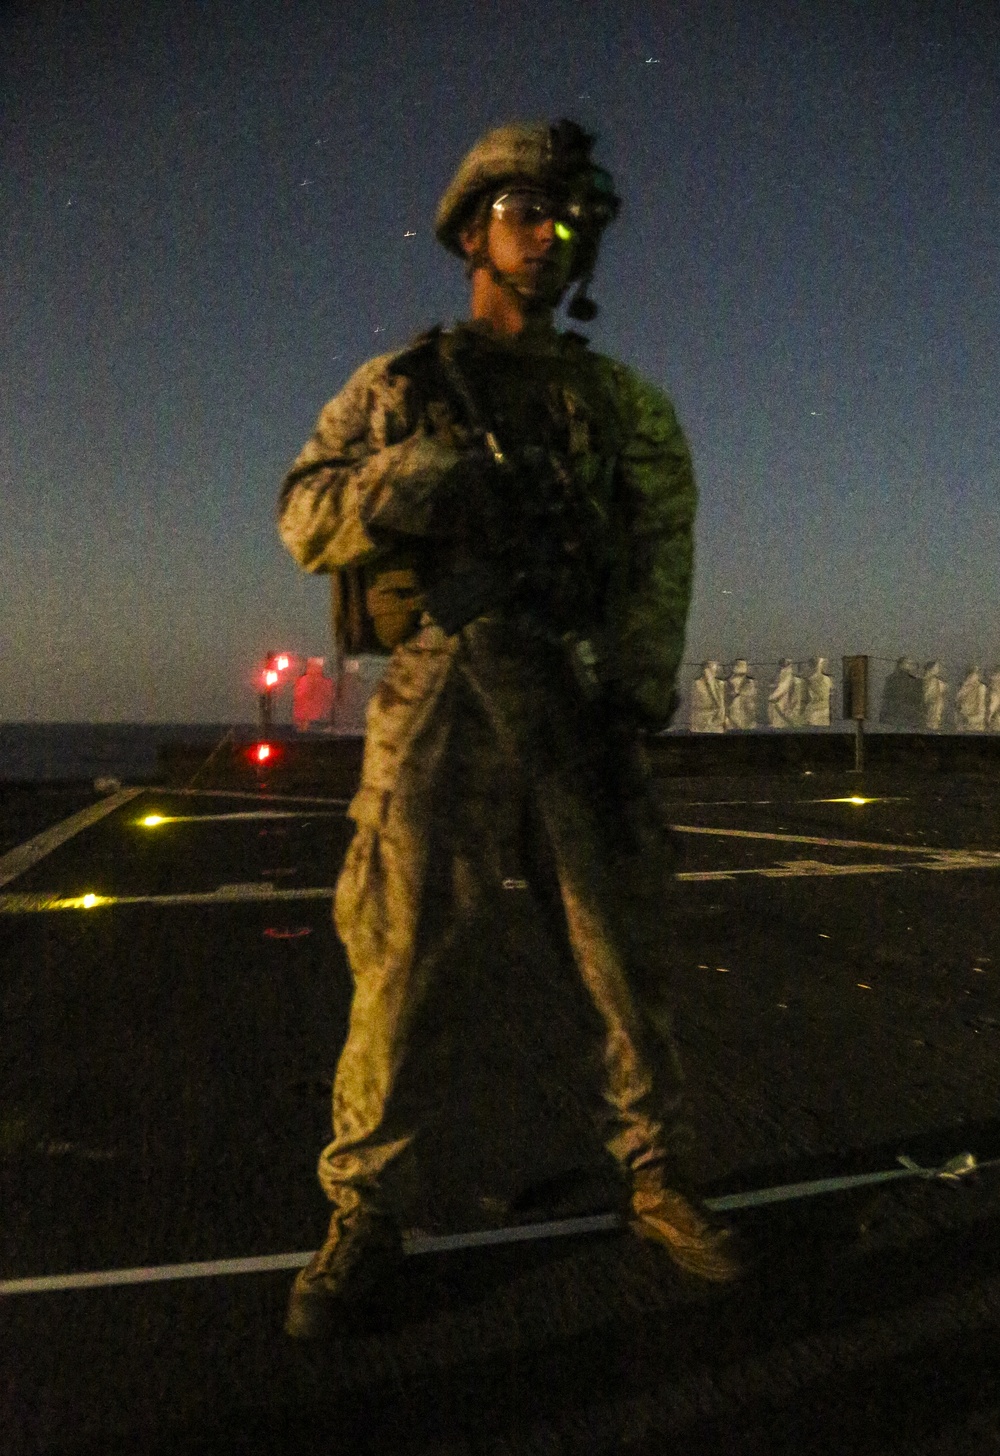 BLT, 22nd MEU Conducts Night Combat Marksmanship aboard USS Whidbey Island